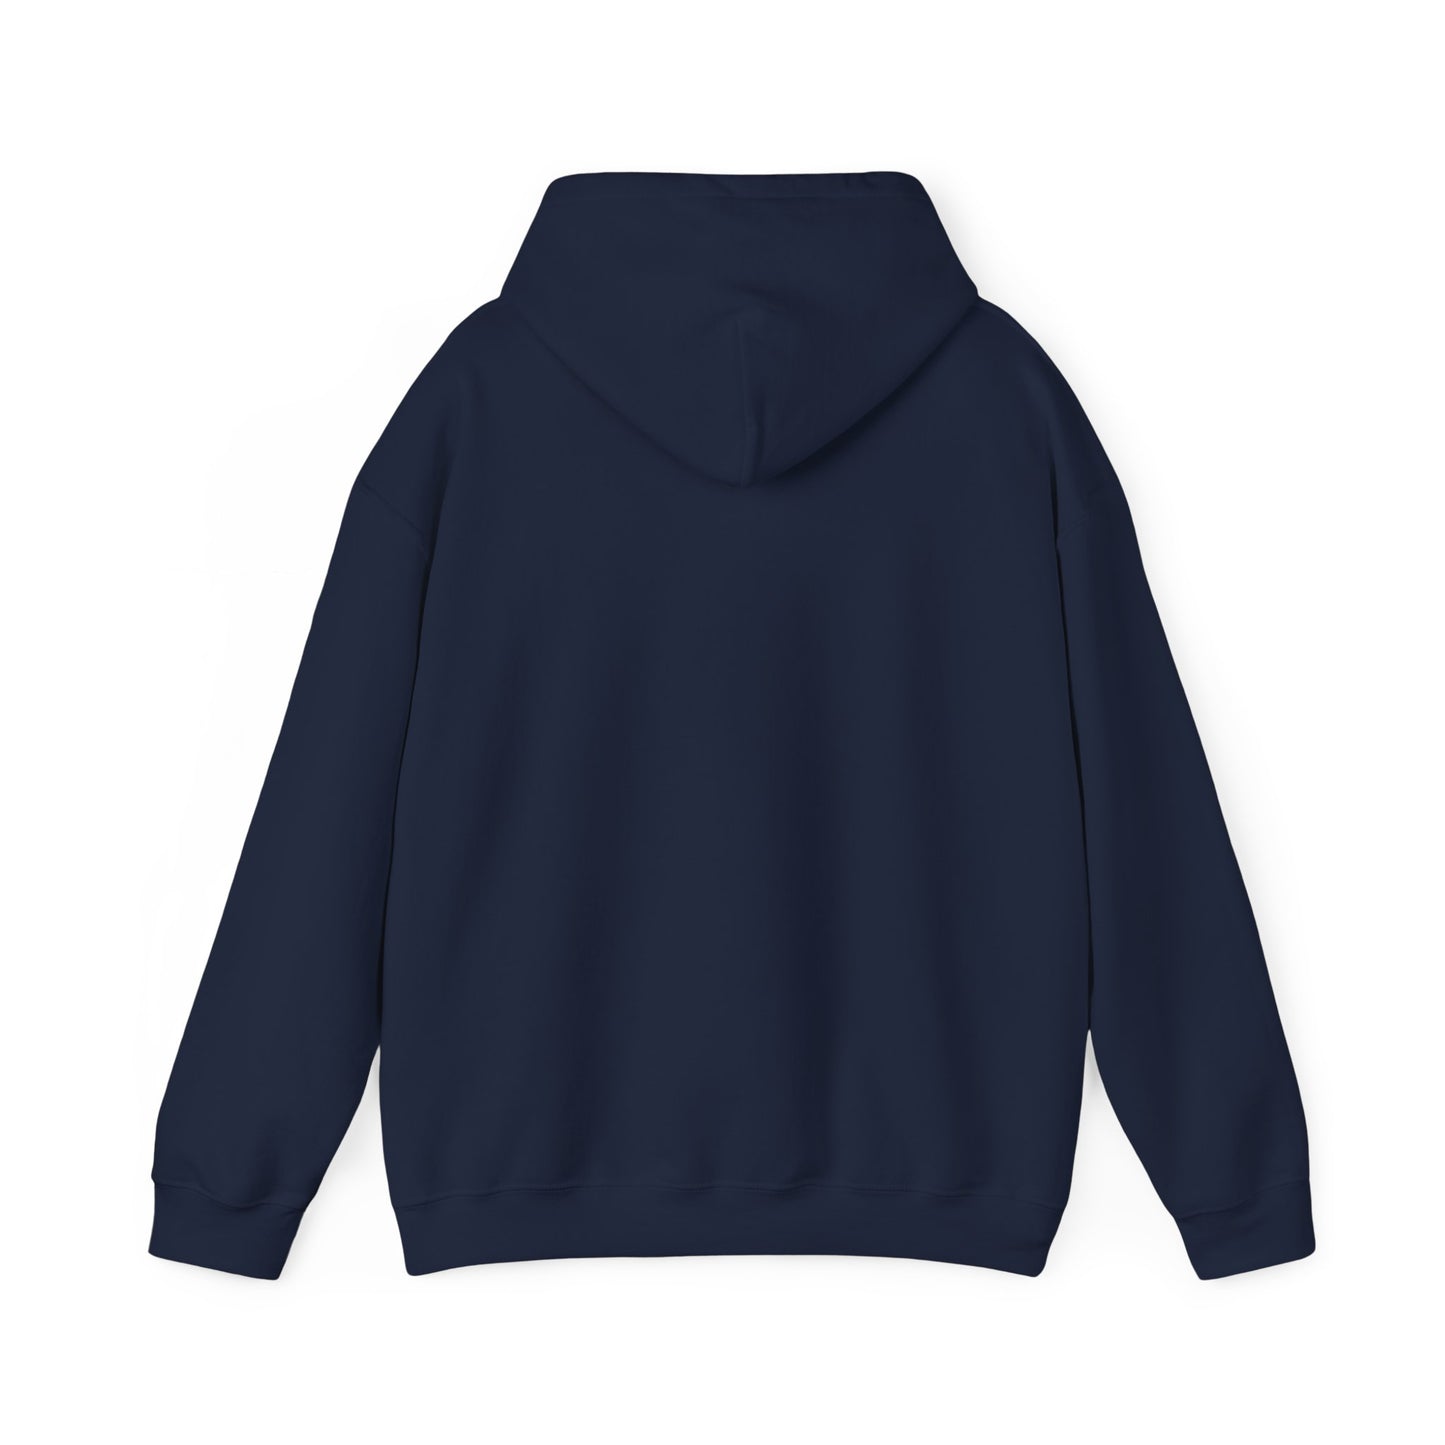 Loved - Unisex Heavy Blend Hooded Sweatshirt